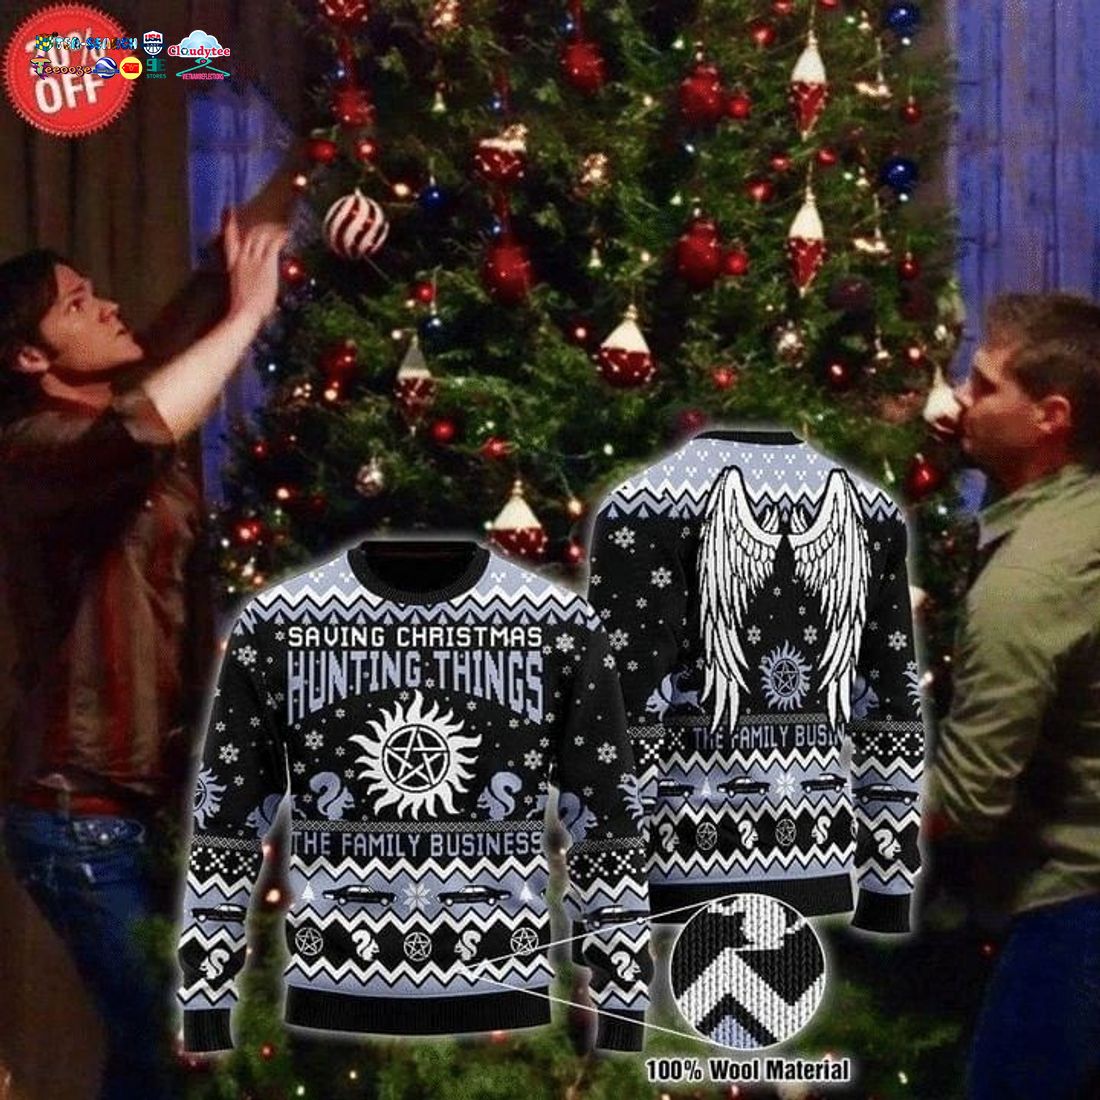 The Family Business Saving Christmas Hunting Things Ugly Christmas Sweater